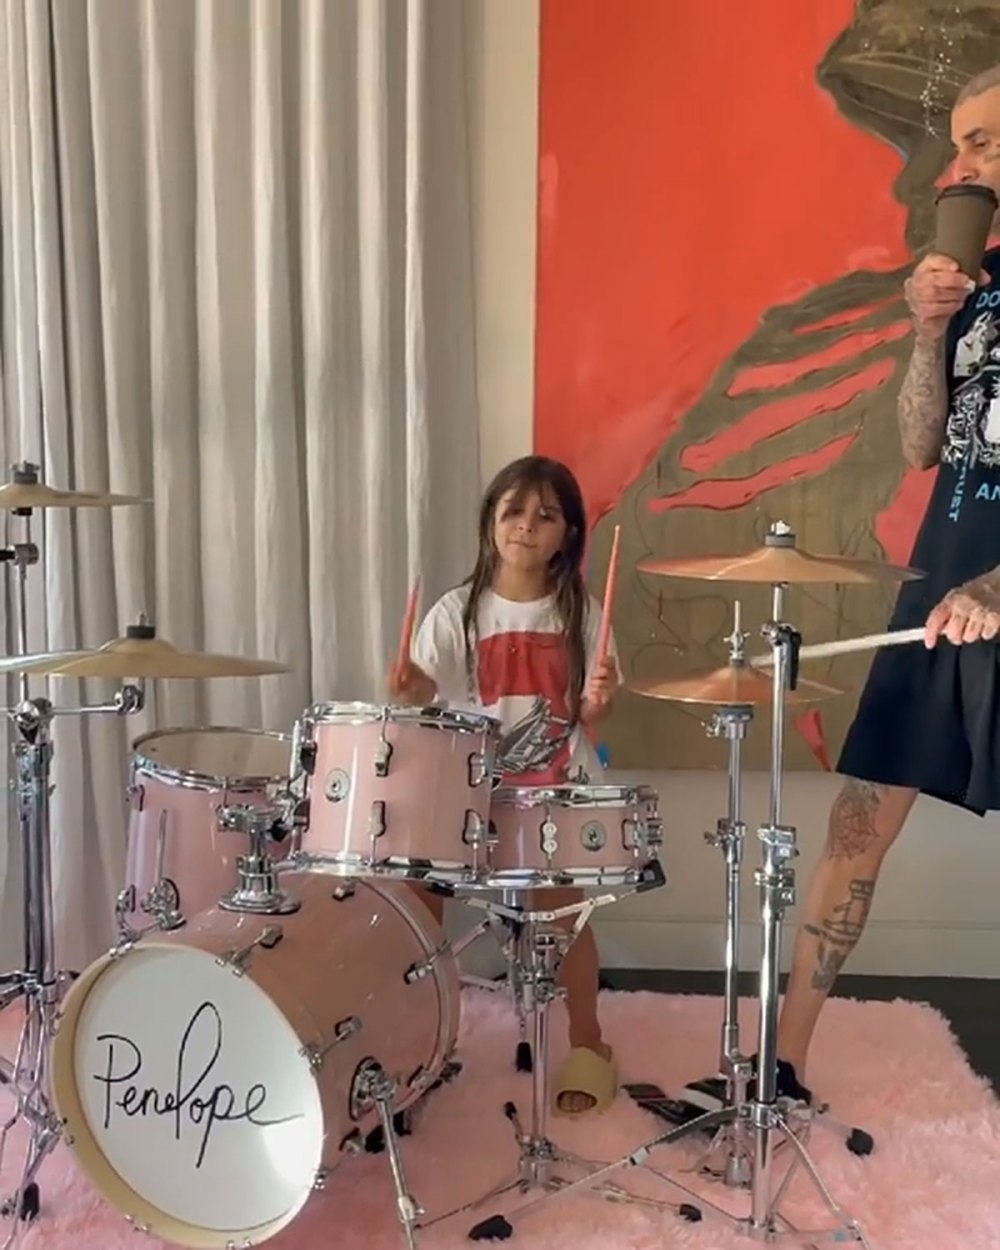 Travis Barker gifts Kourtney Kardashian's daughter drums